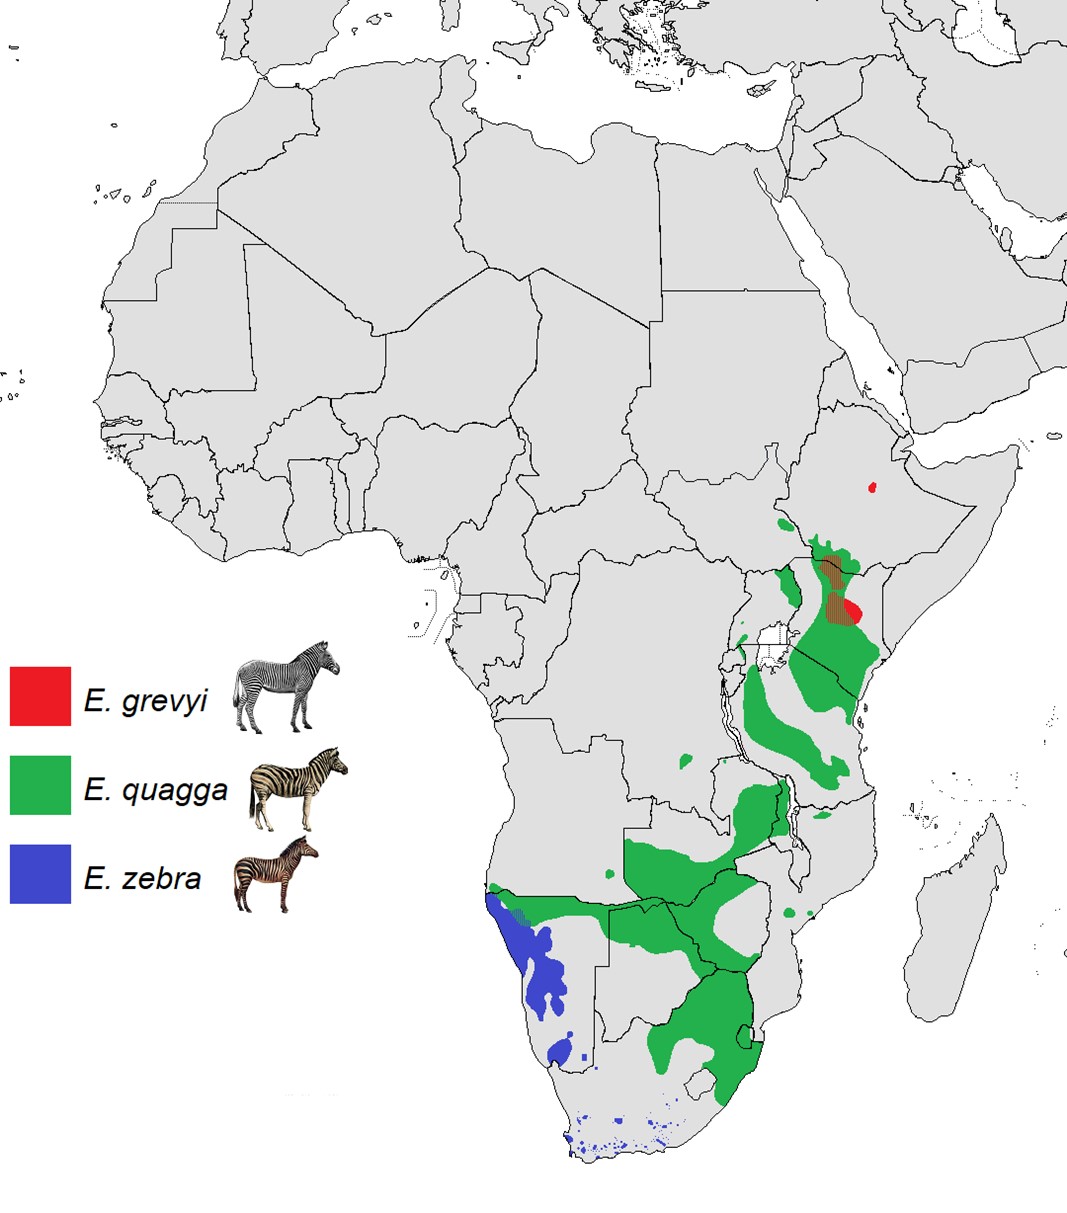 The modern range of zebra species